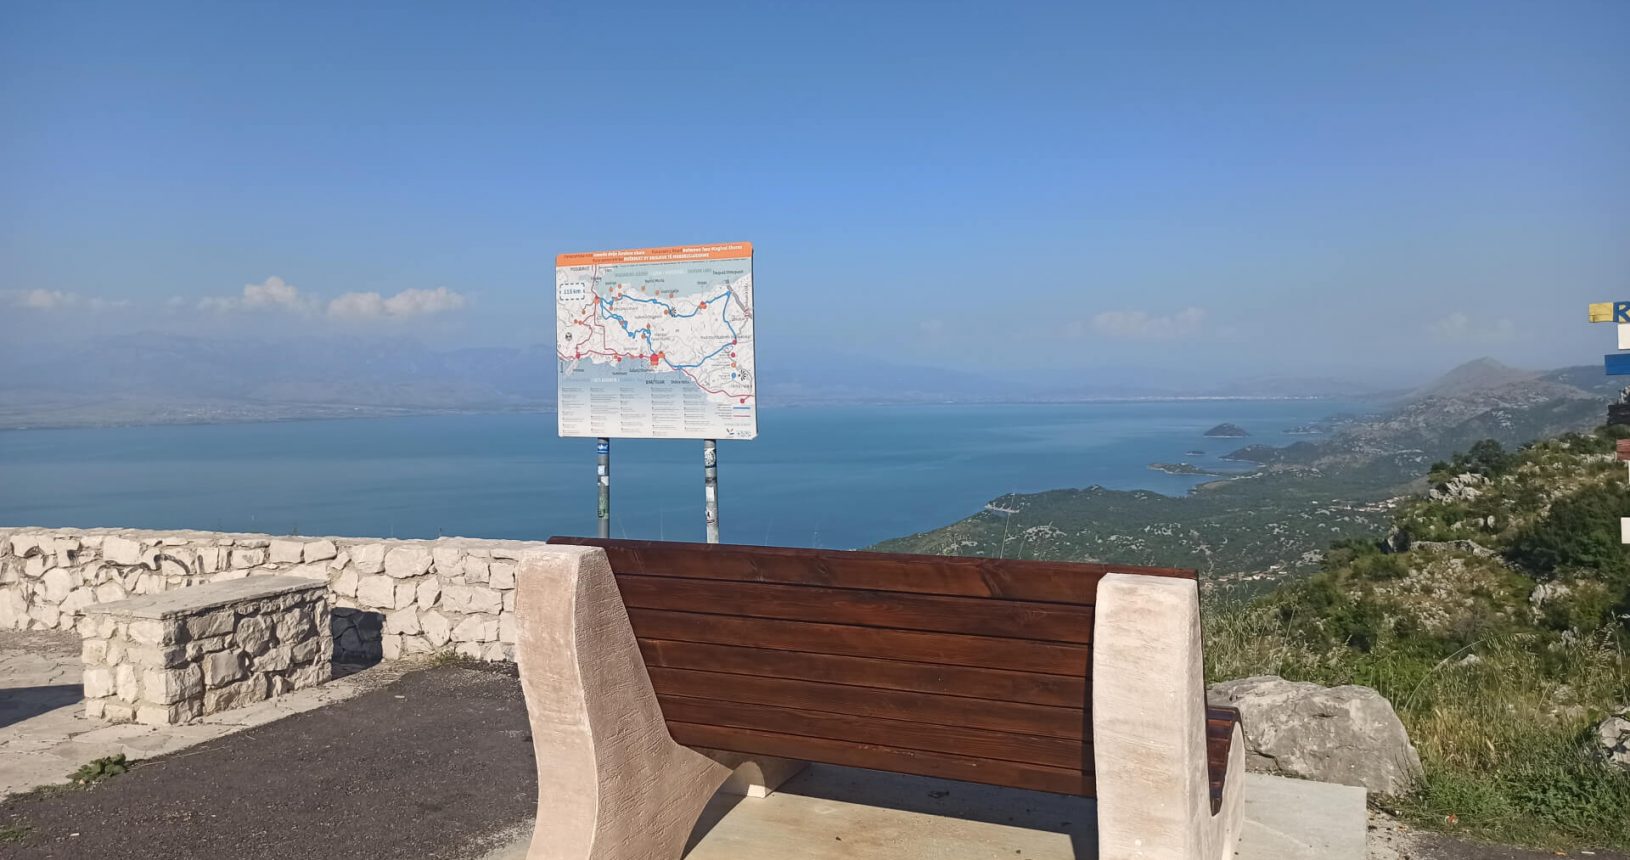 Observing Skadar lake. Viewpoint Livari